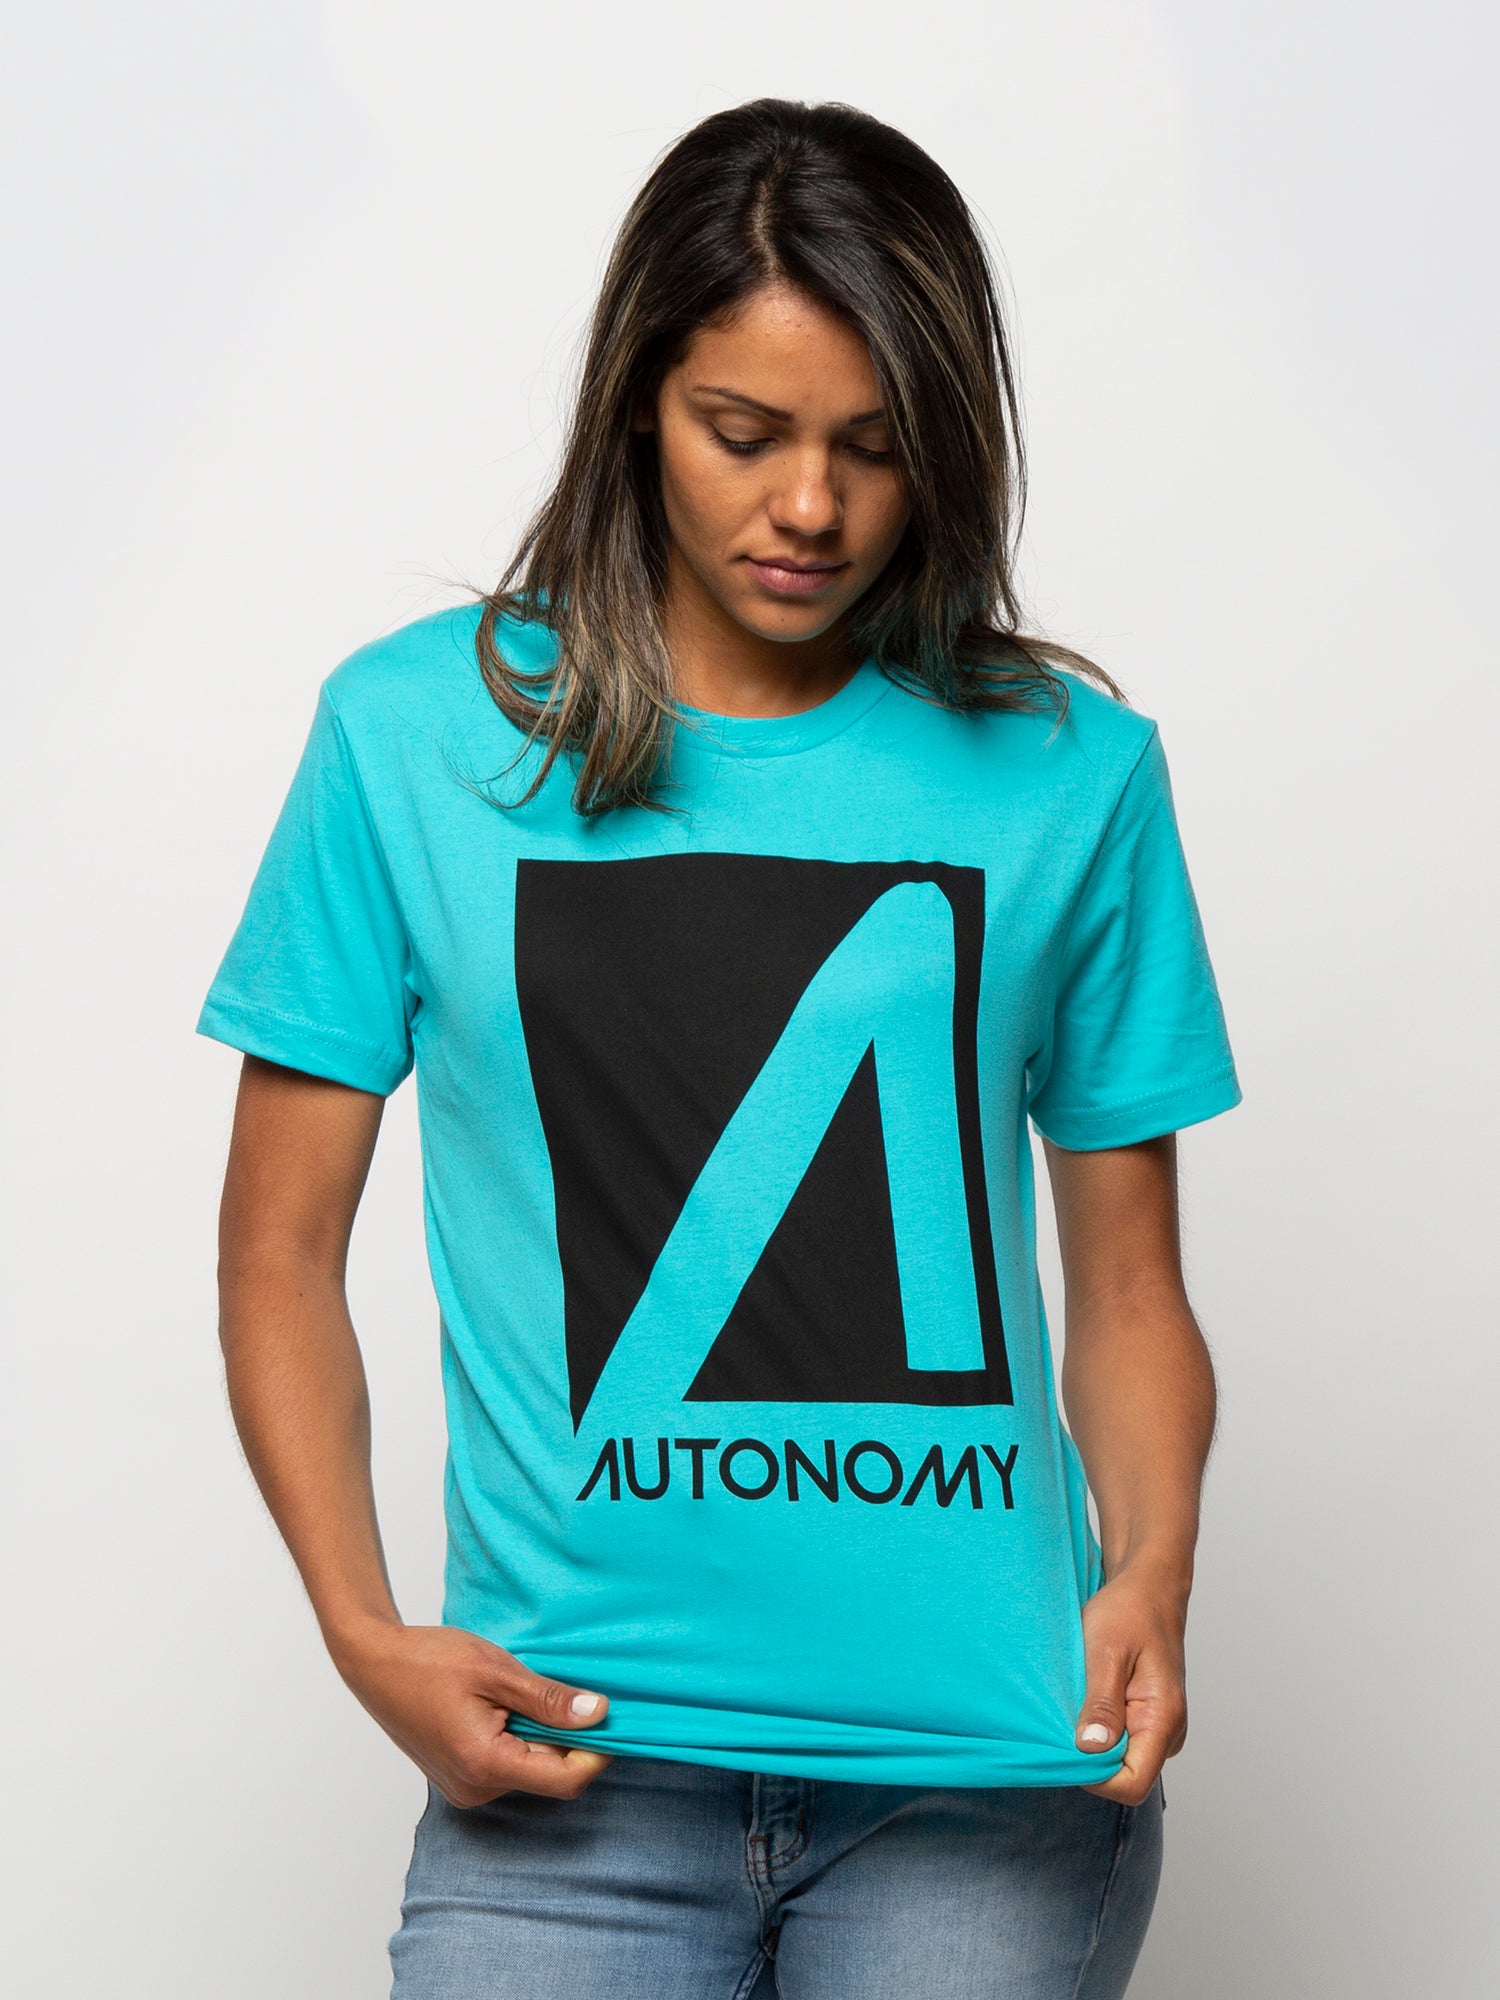 Autonomy No Comply T-shirt - Tahiti Blue